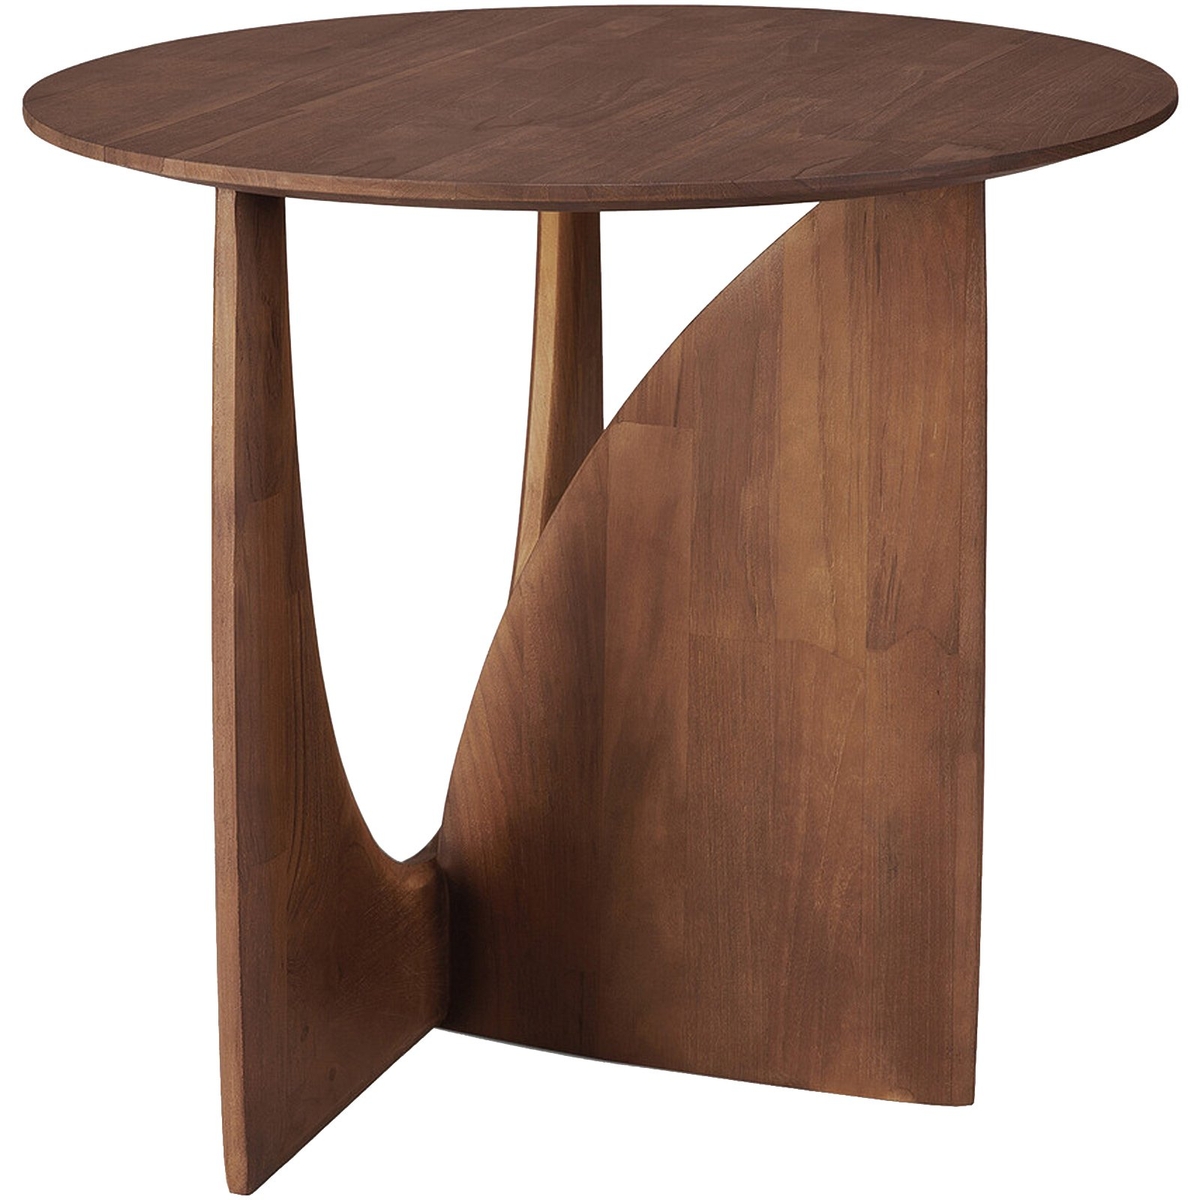 Geometric Round Teak Side Table, Brown